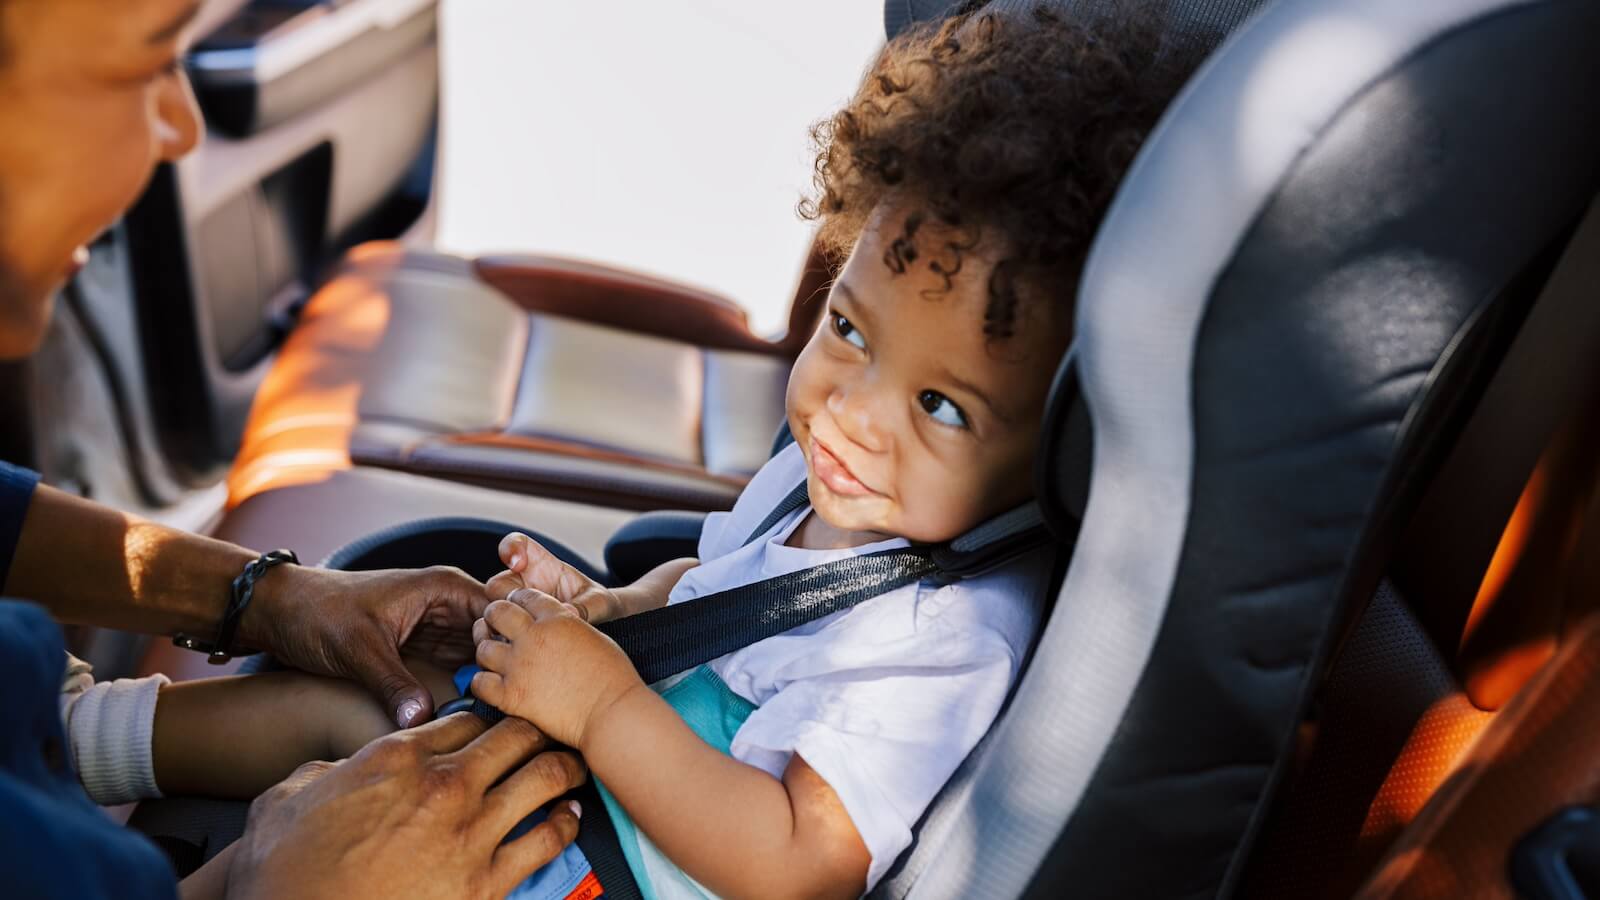 Cute baby smiles in car seat